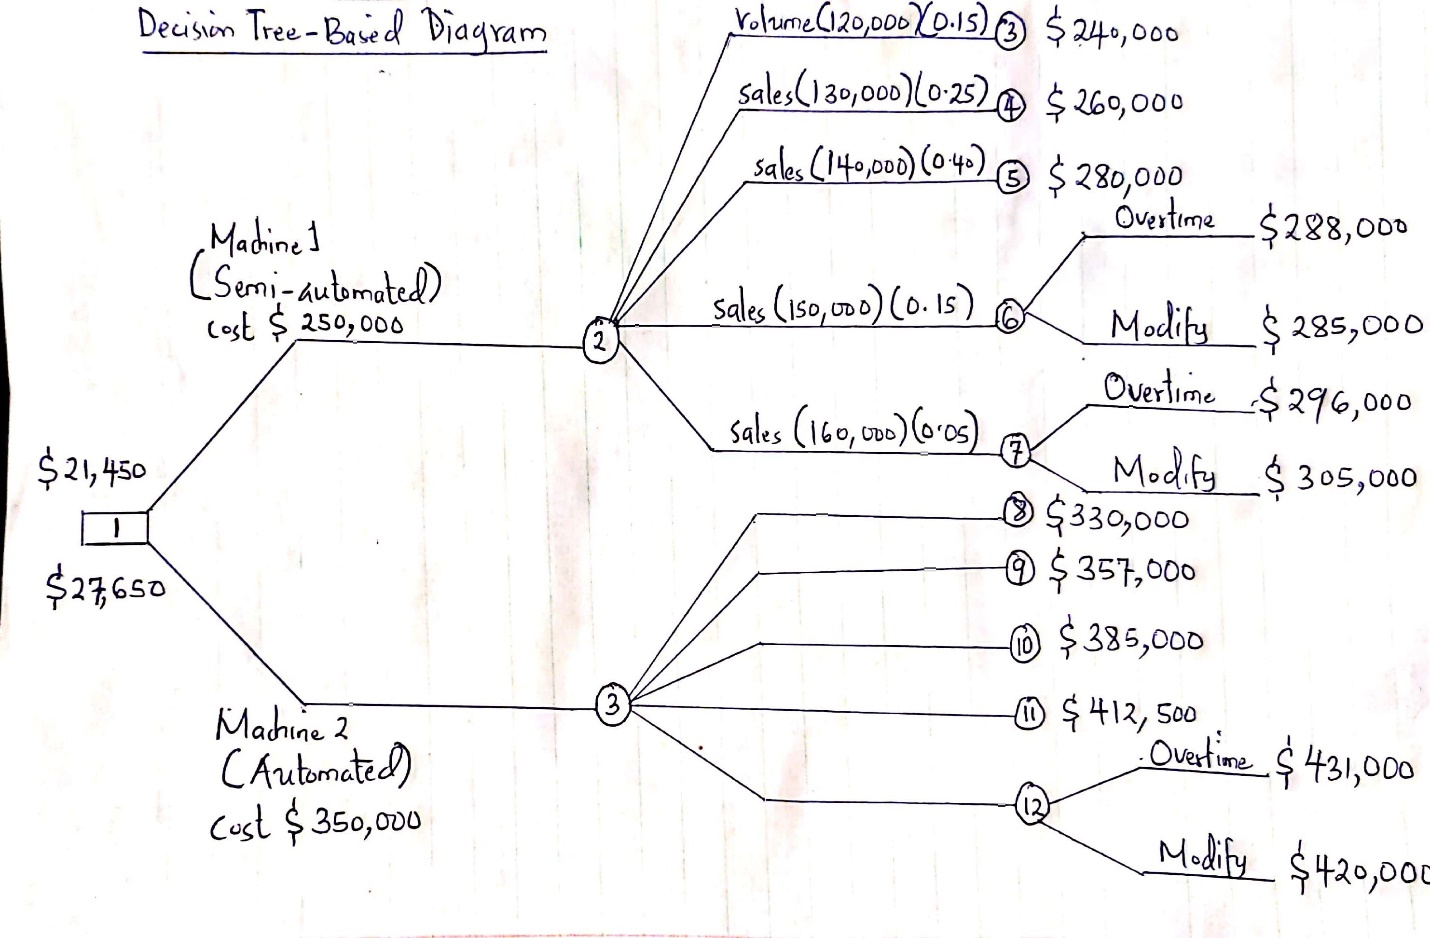 Decision Tree-Based Diagram